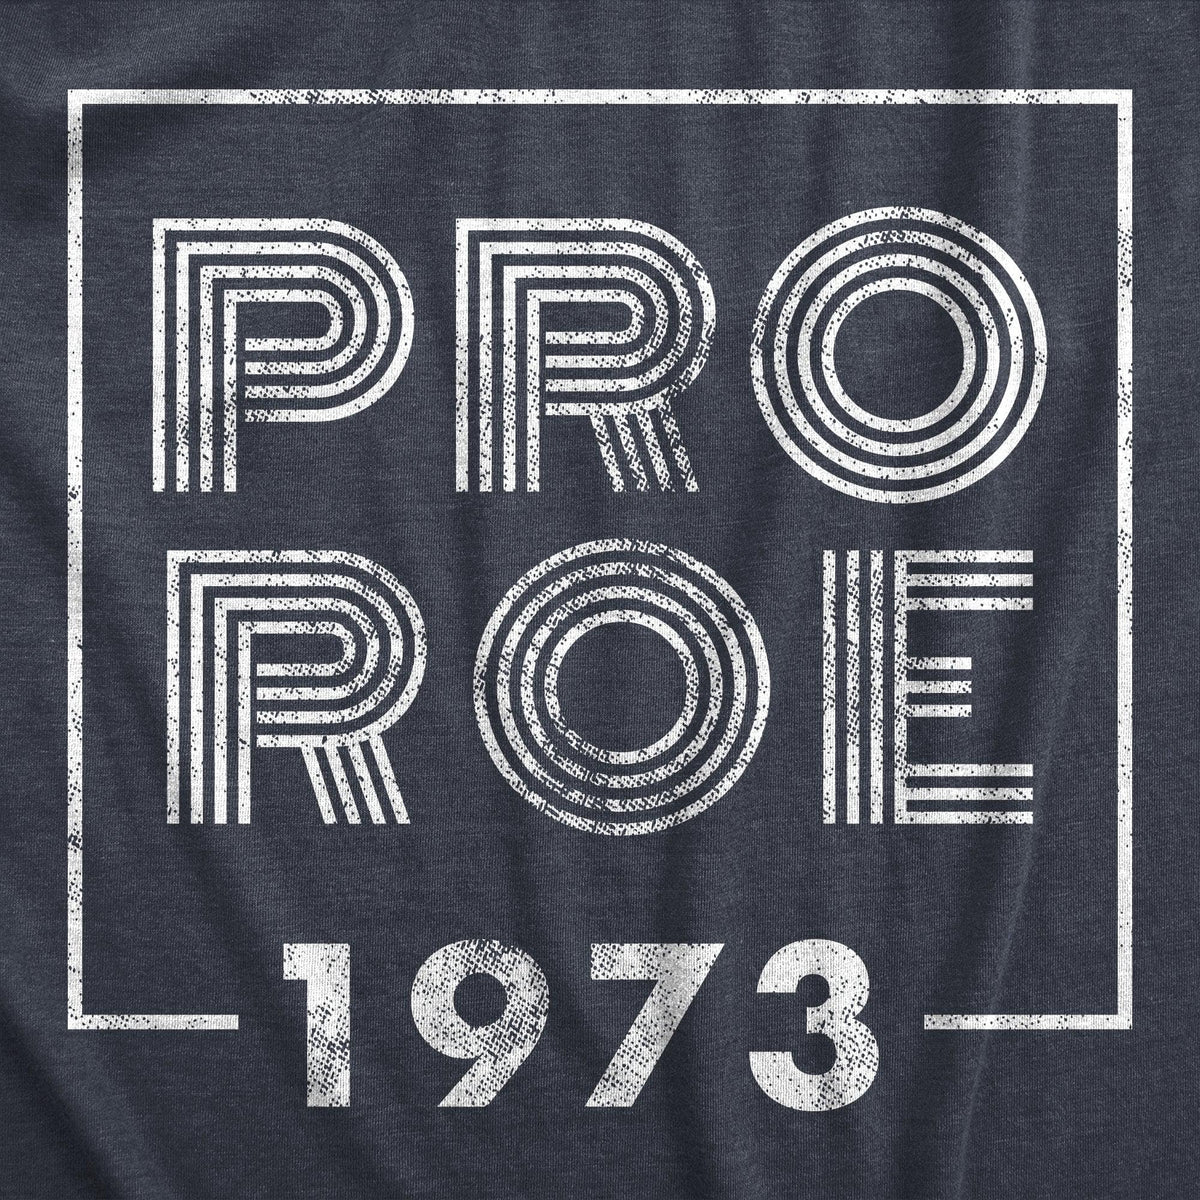 Pro Roe 1973 Men&#39;s Tshirt  -  Crazy Dog T-Shirts